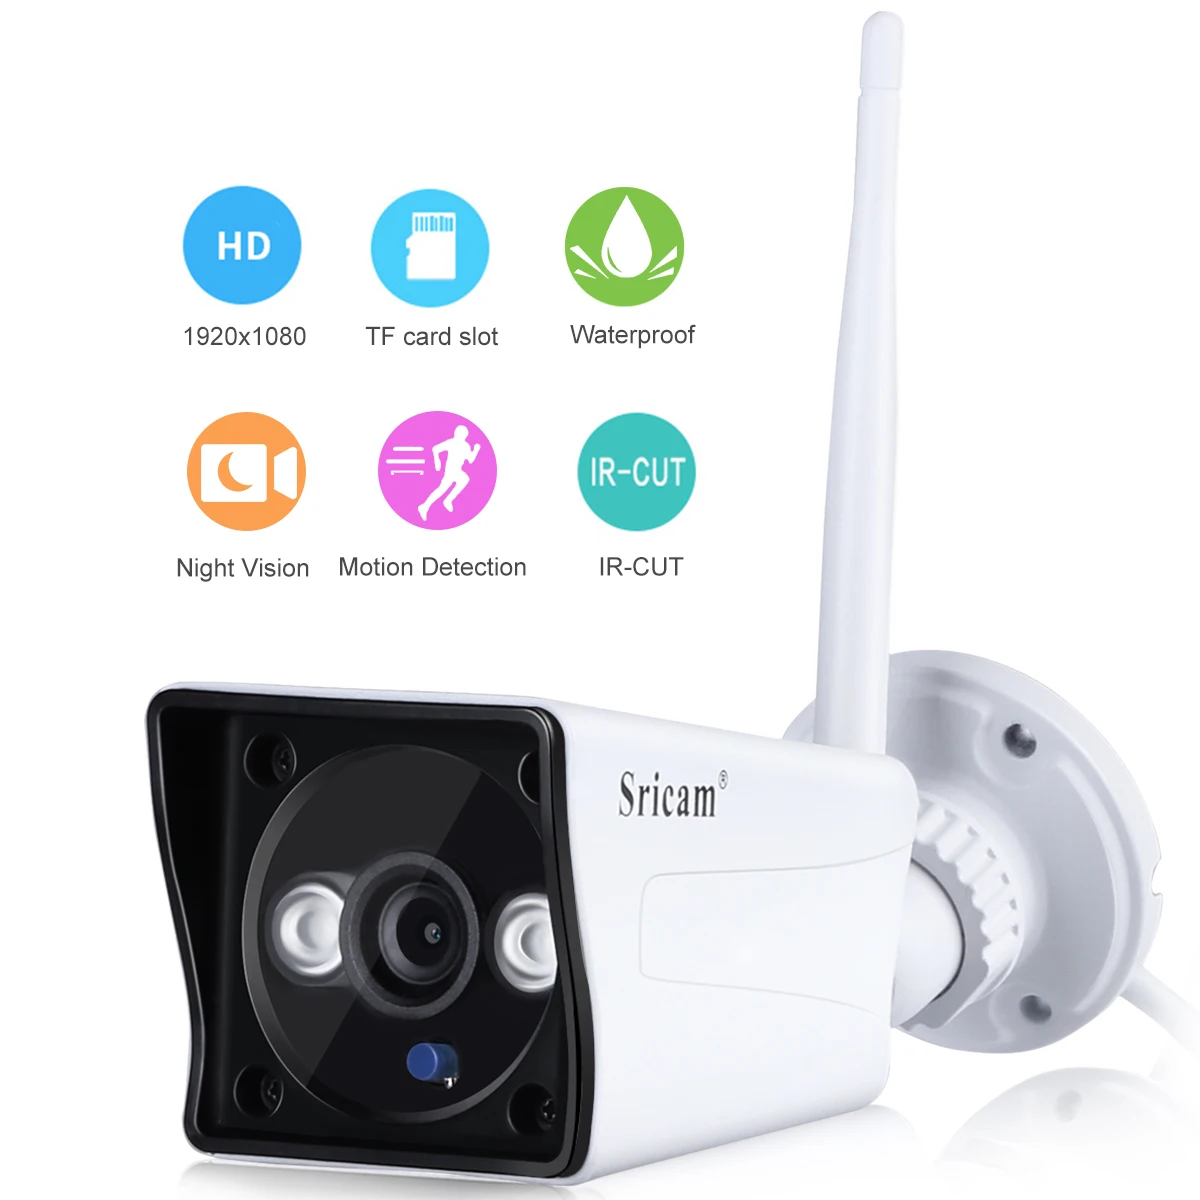 Sricam ночная версия 1080P HD ip-камера беспроводная Wifi камера CCTV безопасности наружная Водонепроницаемая интеллектуальная ip-камера TF слот